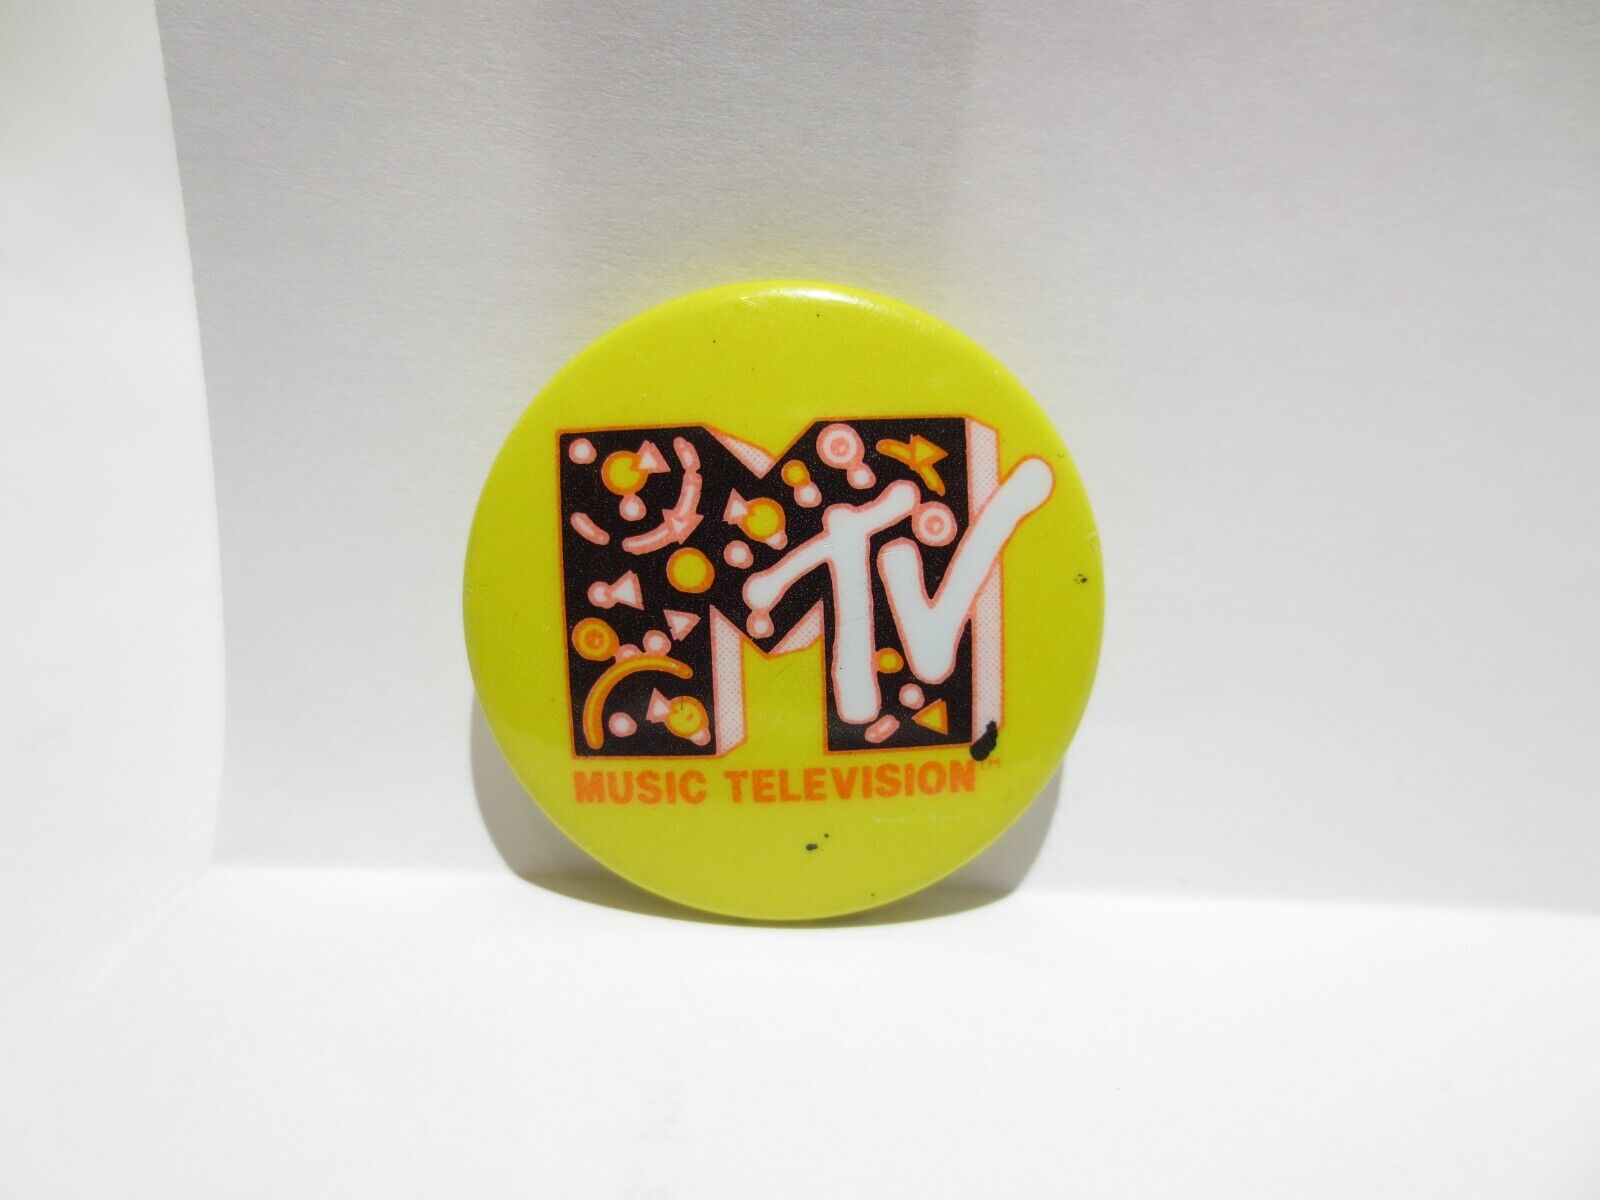 1984 MTV Music Television Pinback Button Vintage